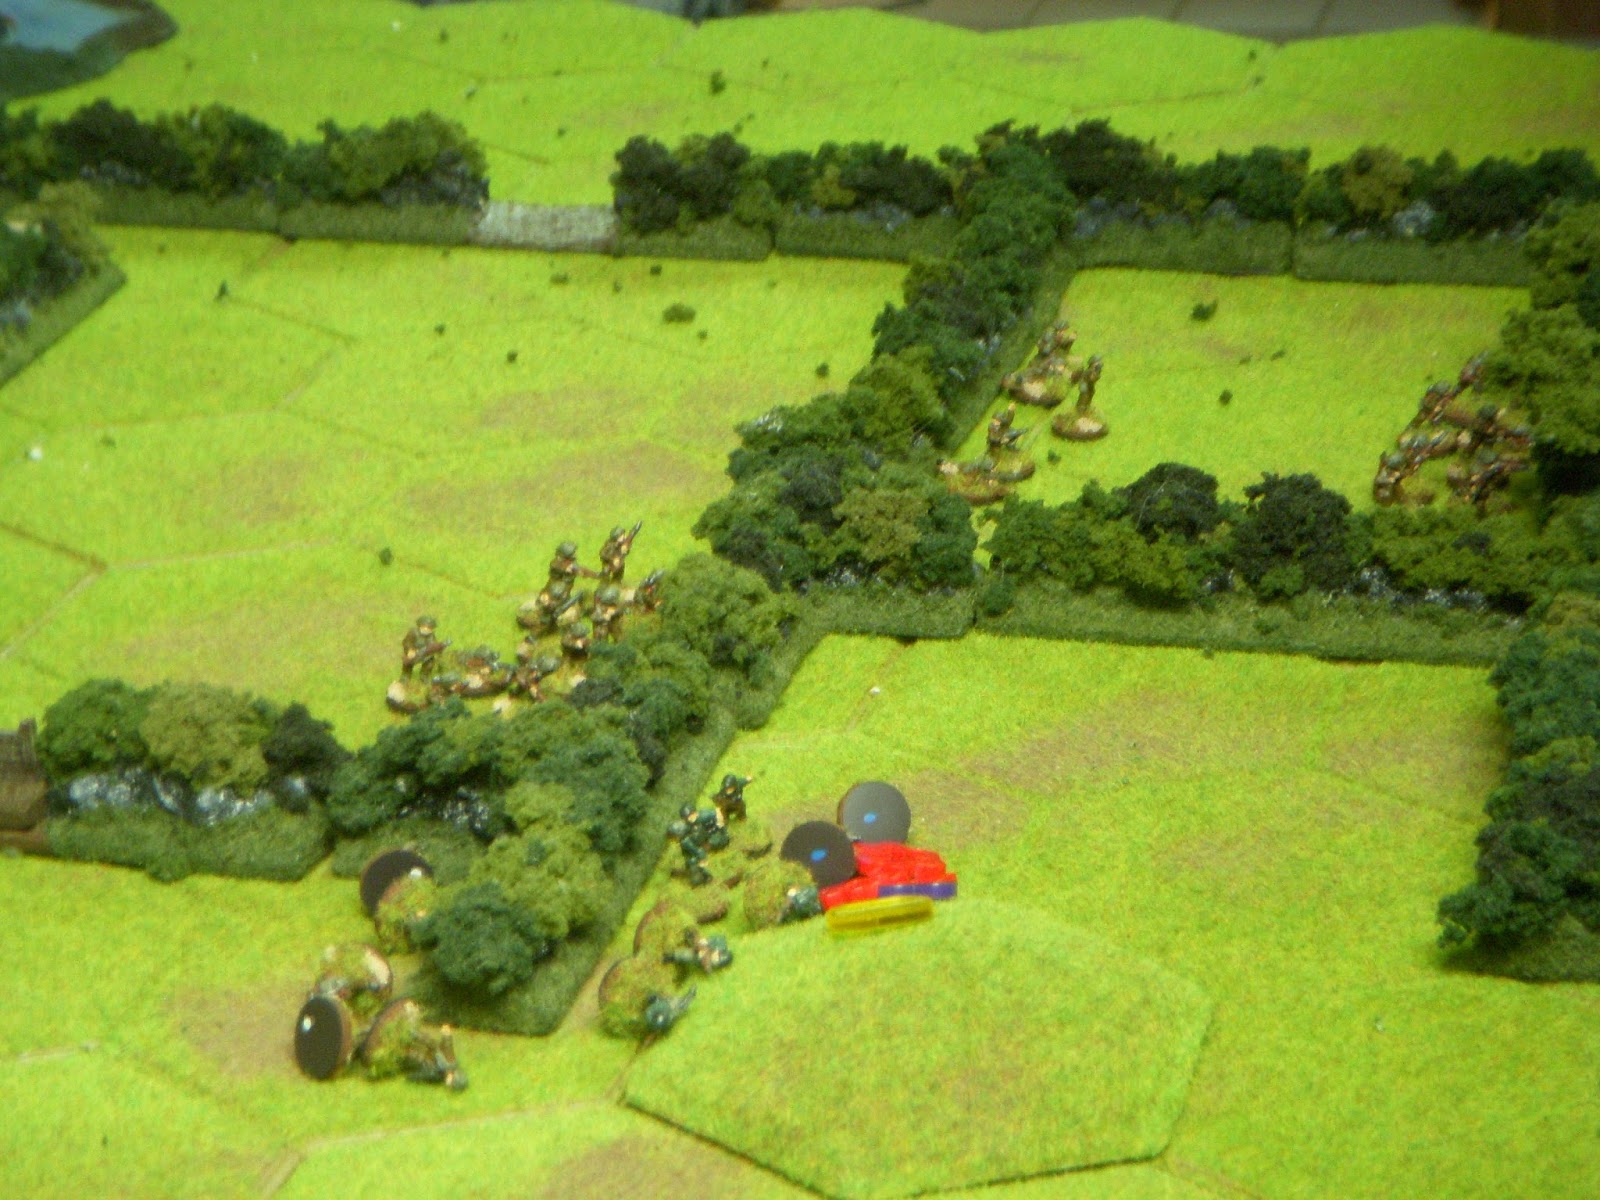  Revenge:&nbsp; 1st platoon gets the ambushers in a crossfire 